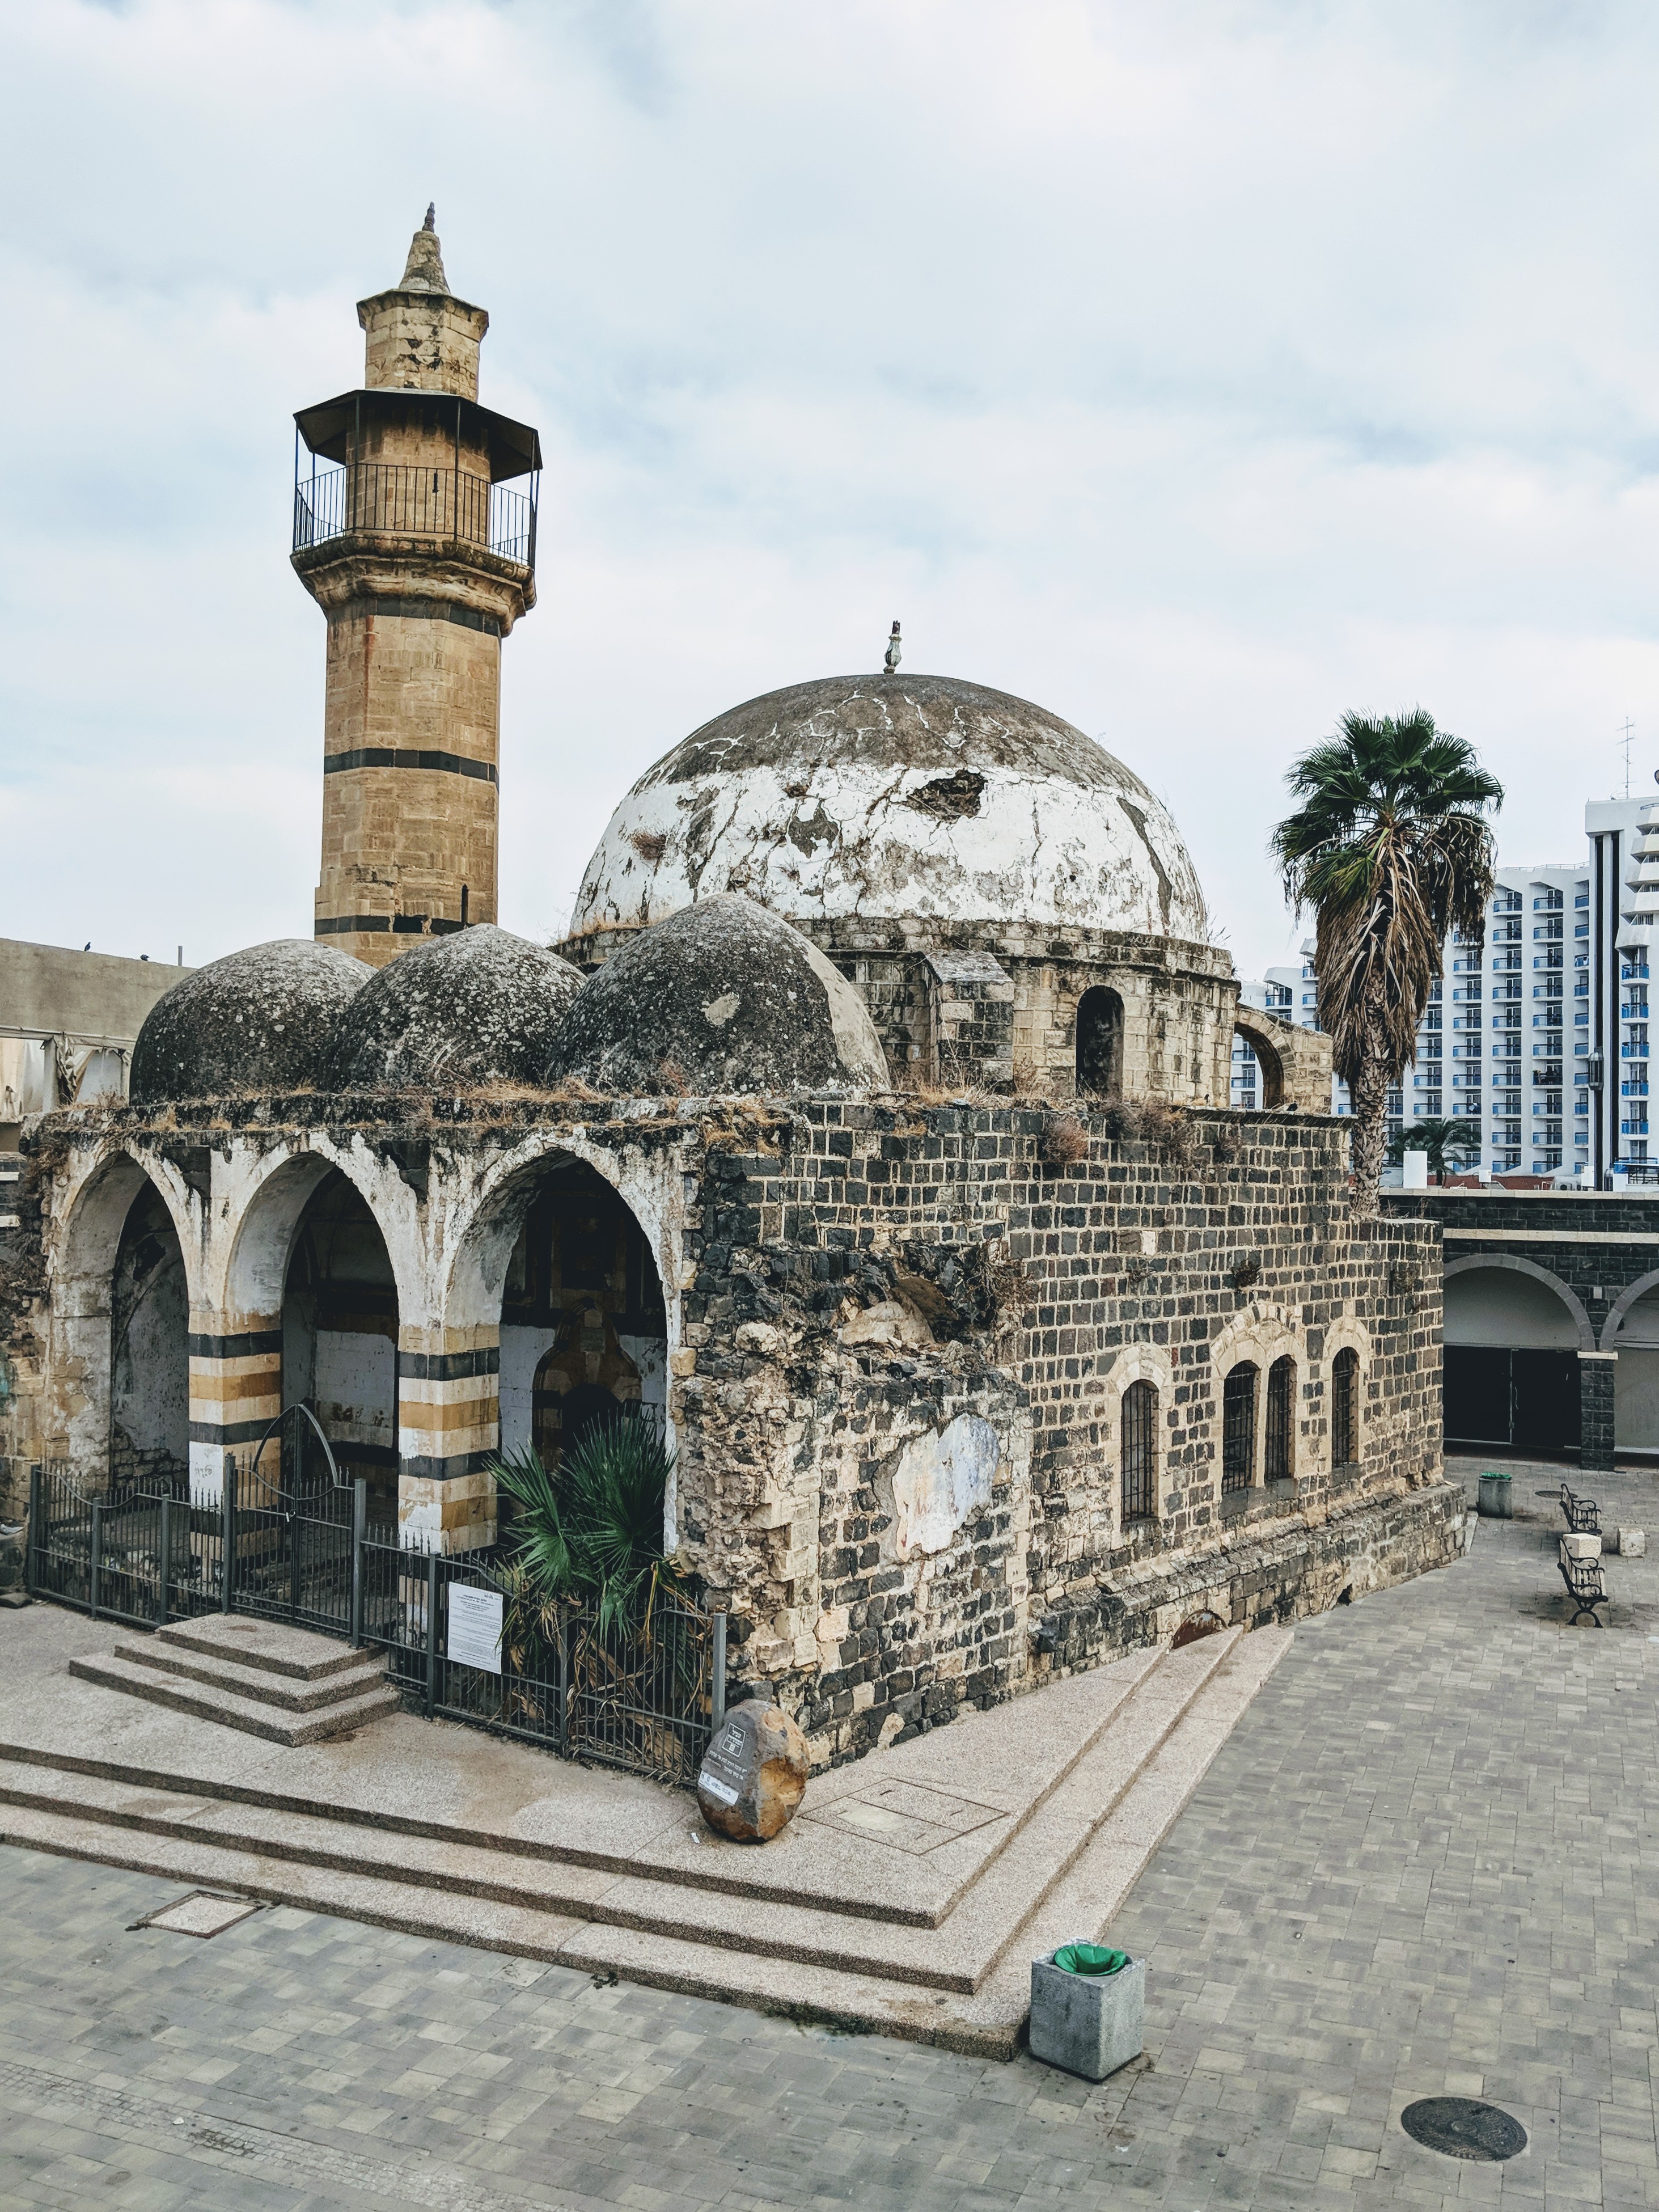 File:מסגד עתיק בעיר העתיקה טבריה.jpg - Wikimedia Commons